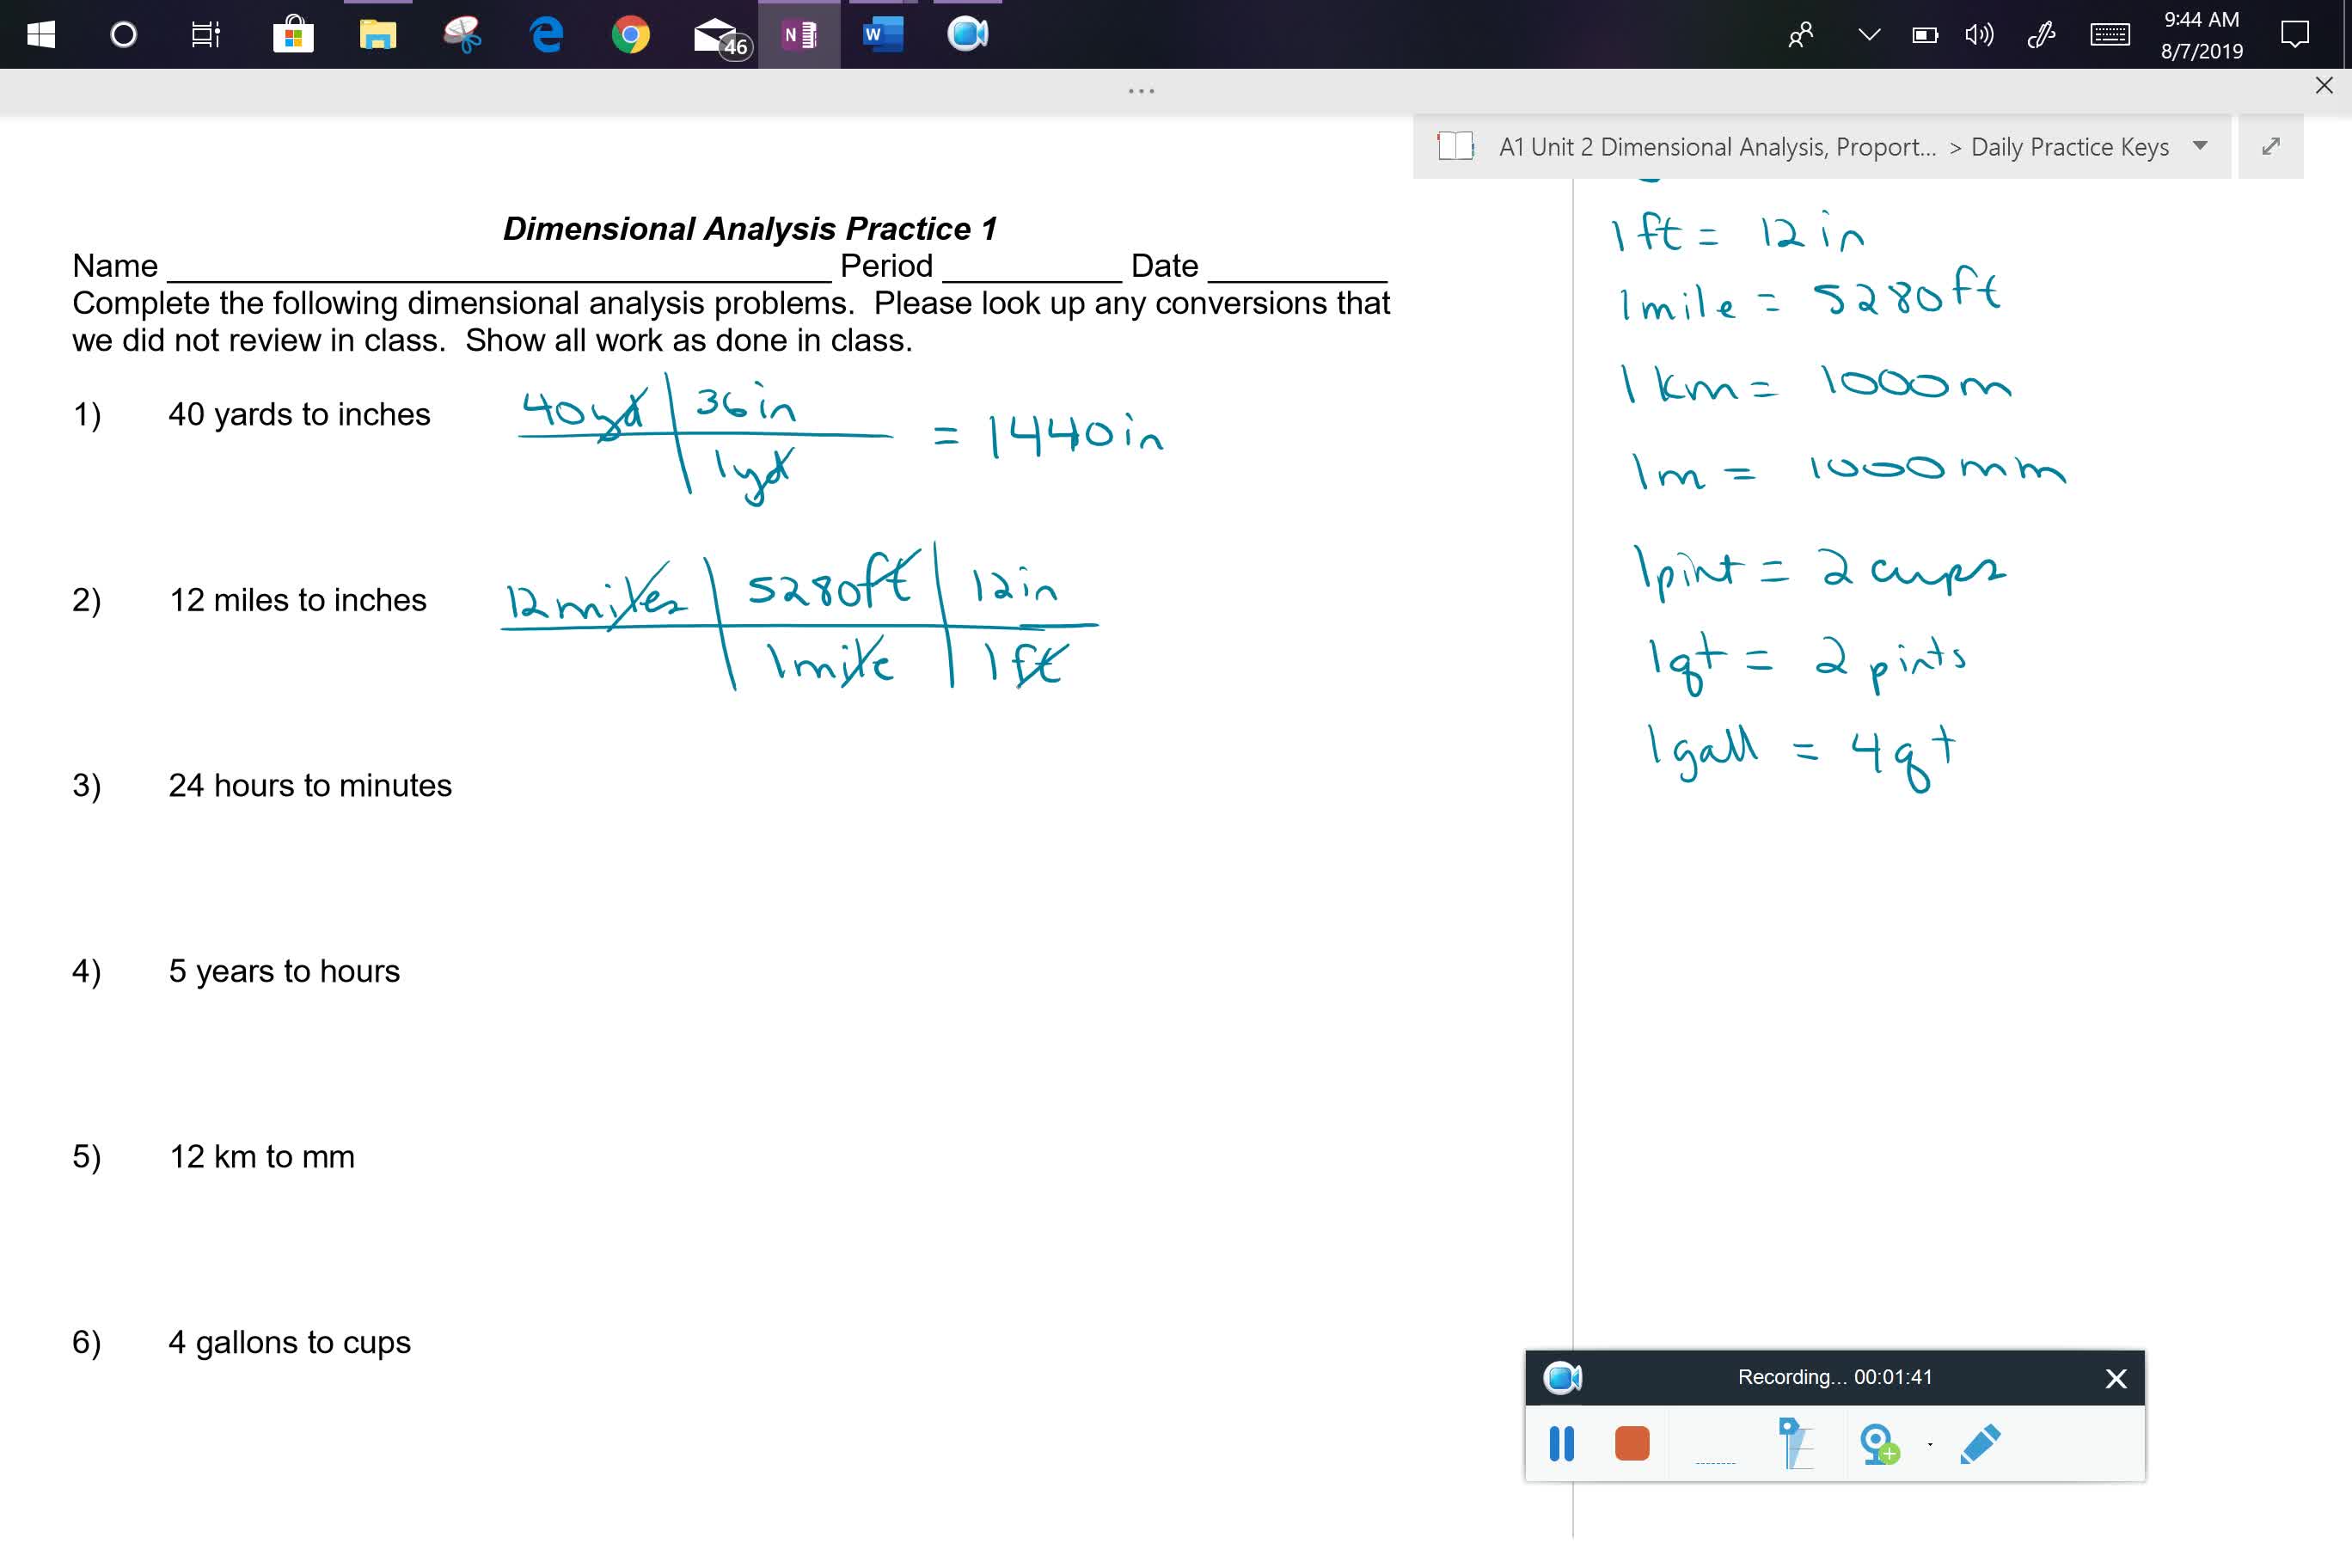 A2222 U22L2222 Dimensional Analysis Worksheet 2222, Math, Middle School In Dimensional Analysis Worksheet 2